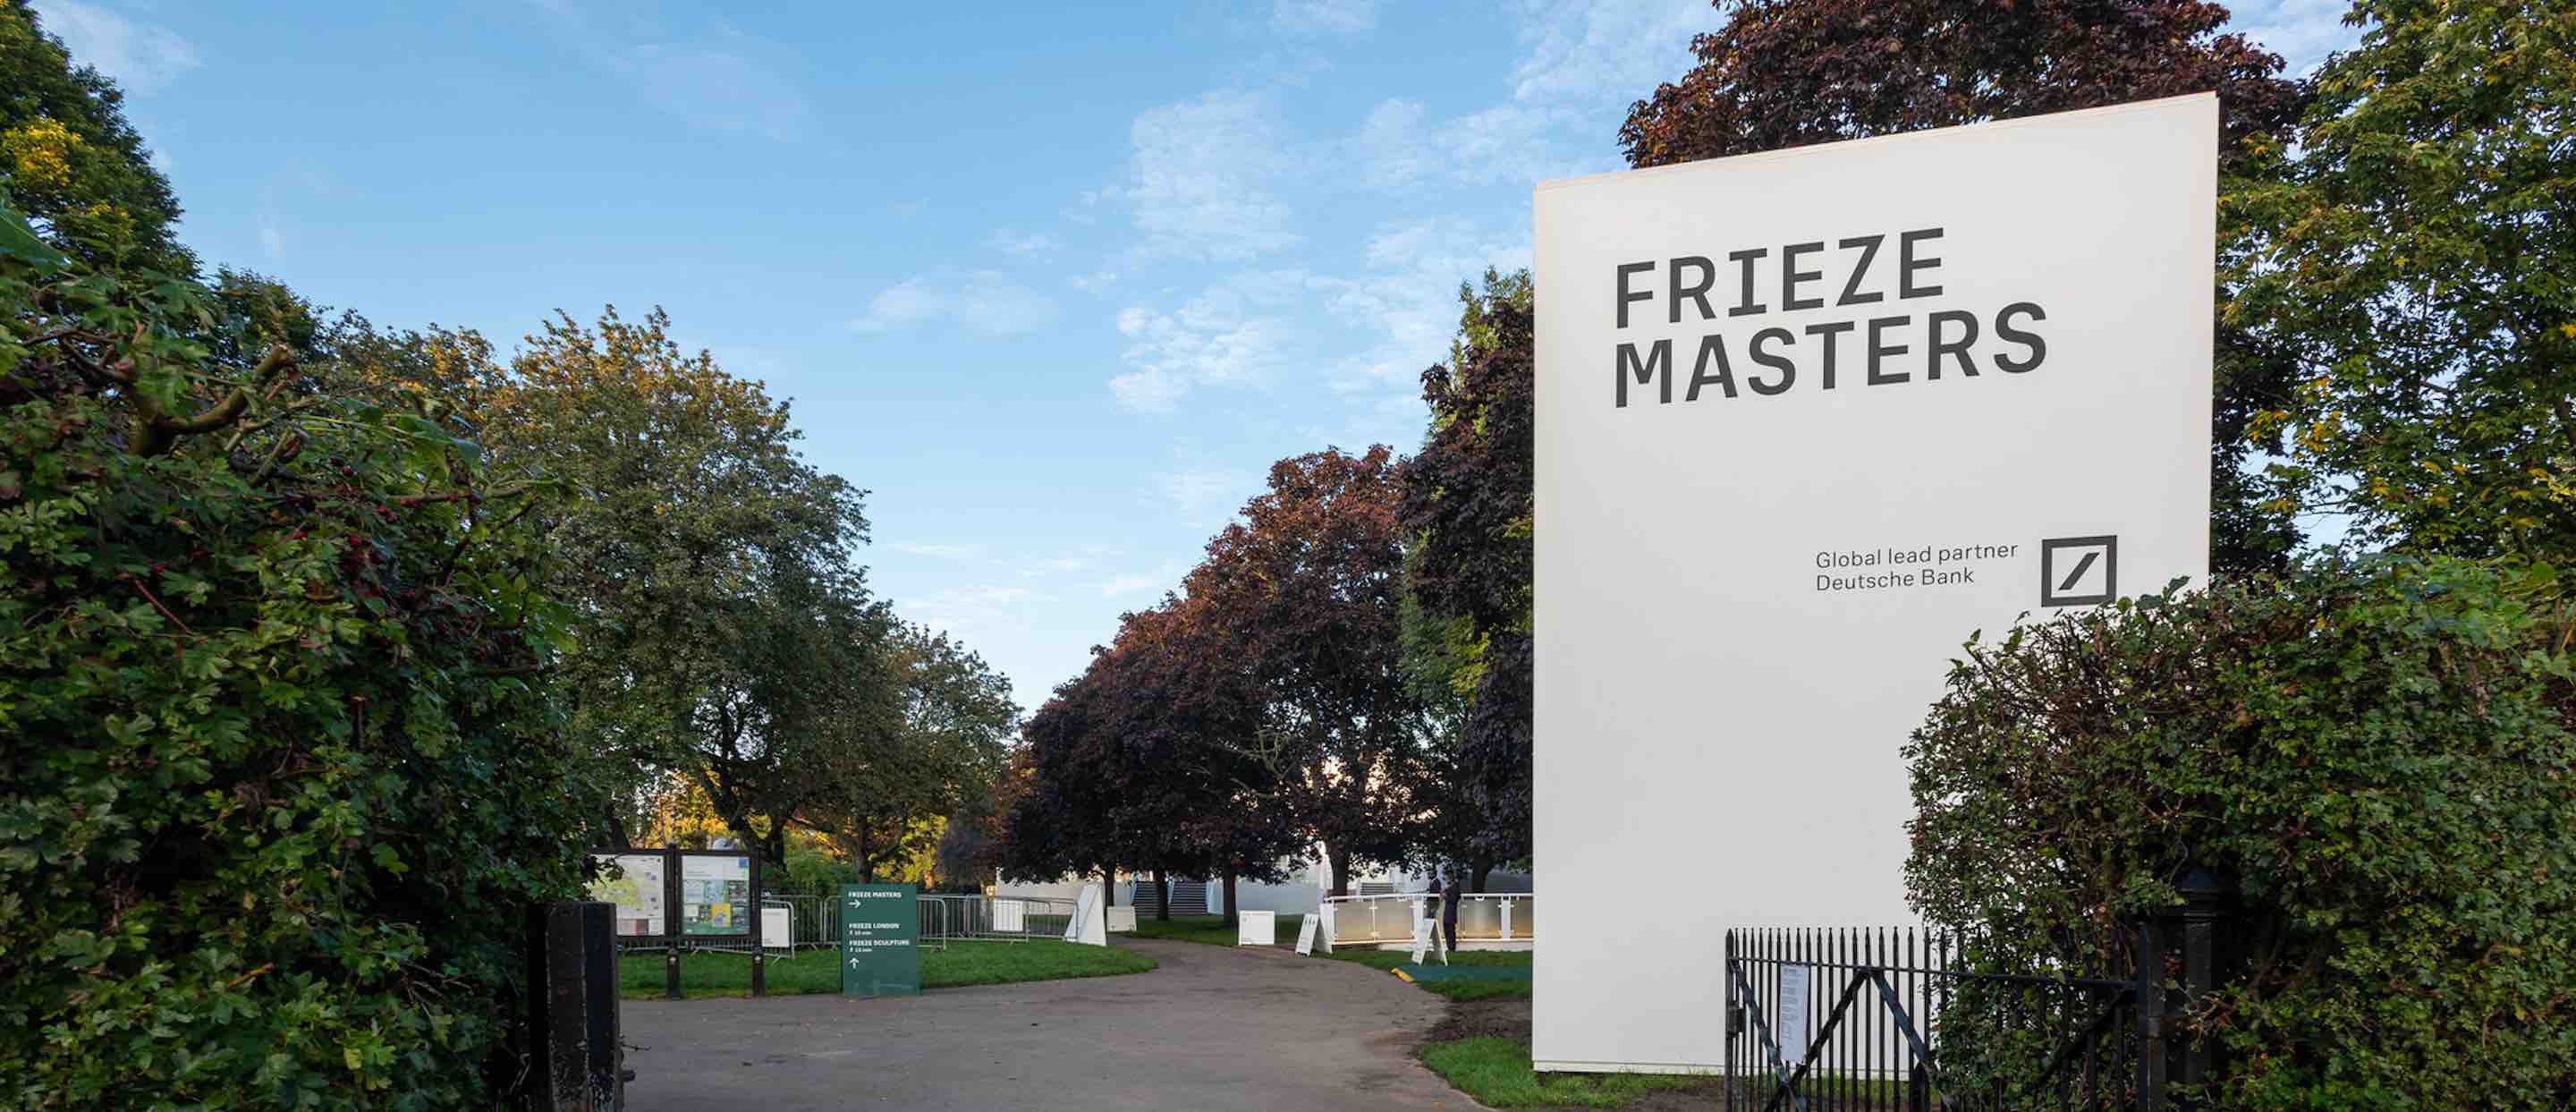 frieze-masters-ext.jpg